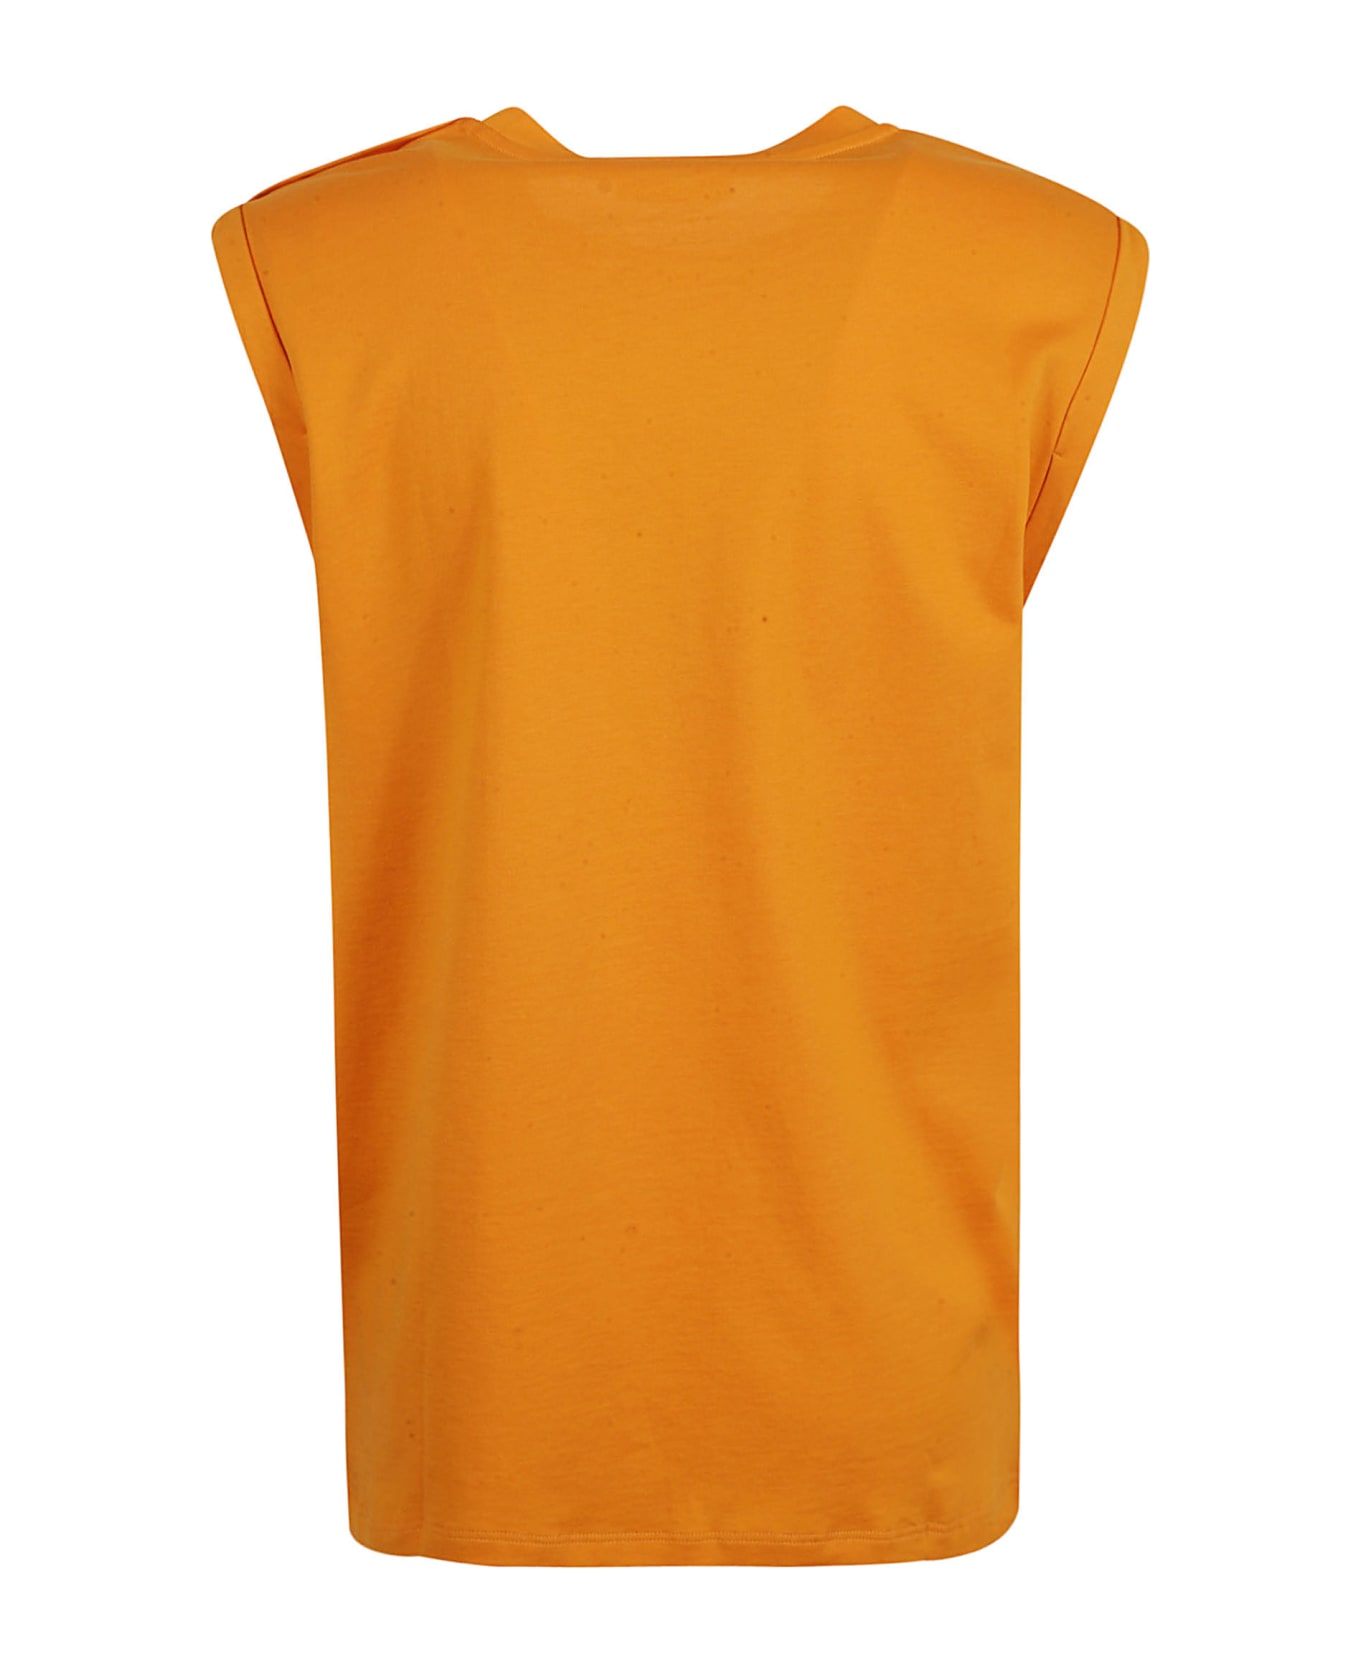 Balmain Logo Print Sleeveless T-shirt - Orange